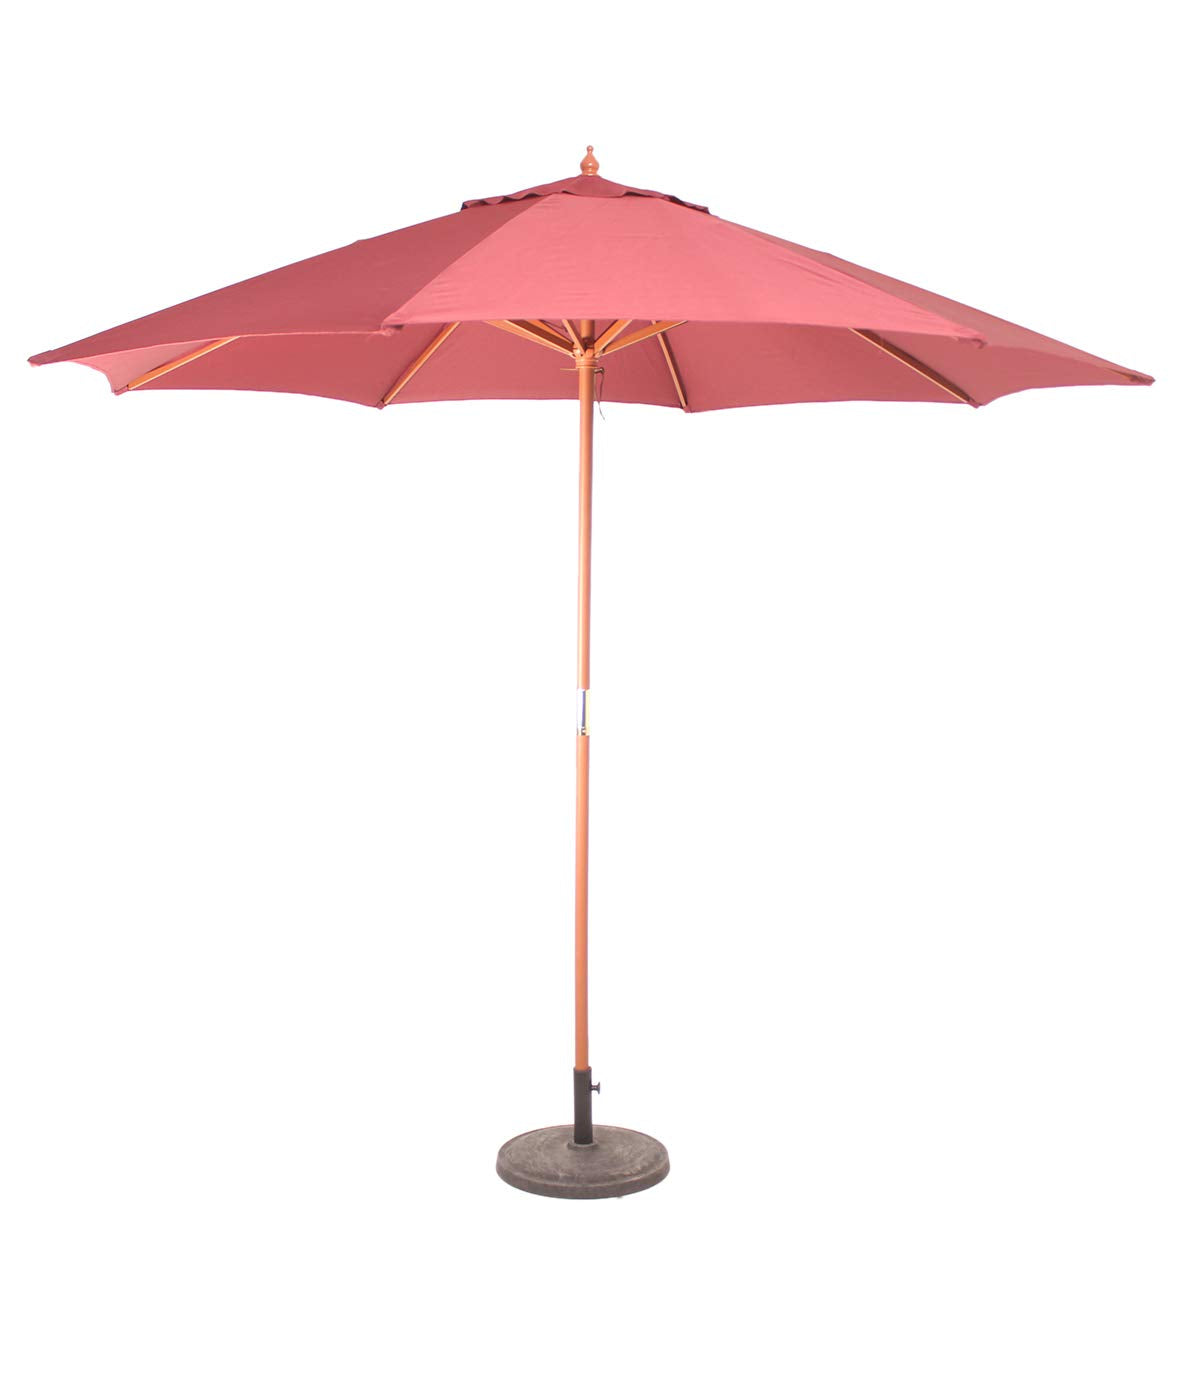 Single Deck Wooden Center Pole Umbrella